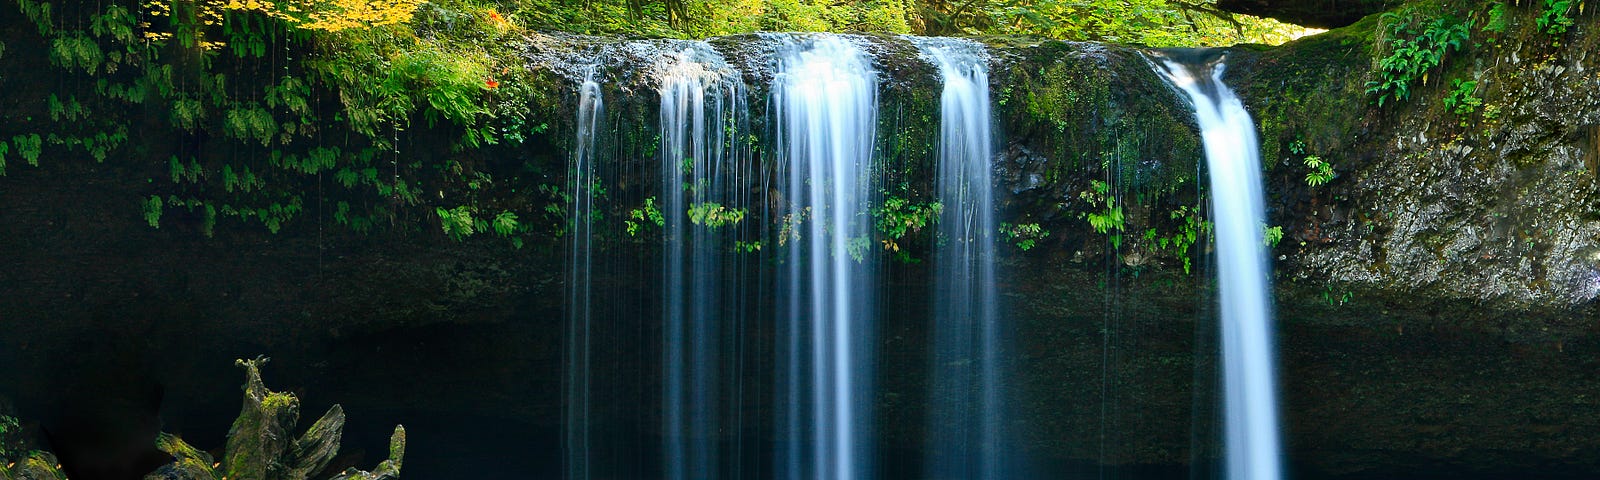 A serene waterfall